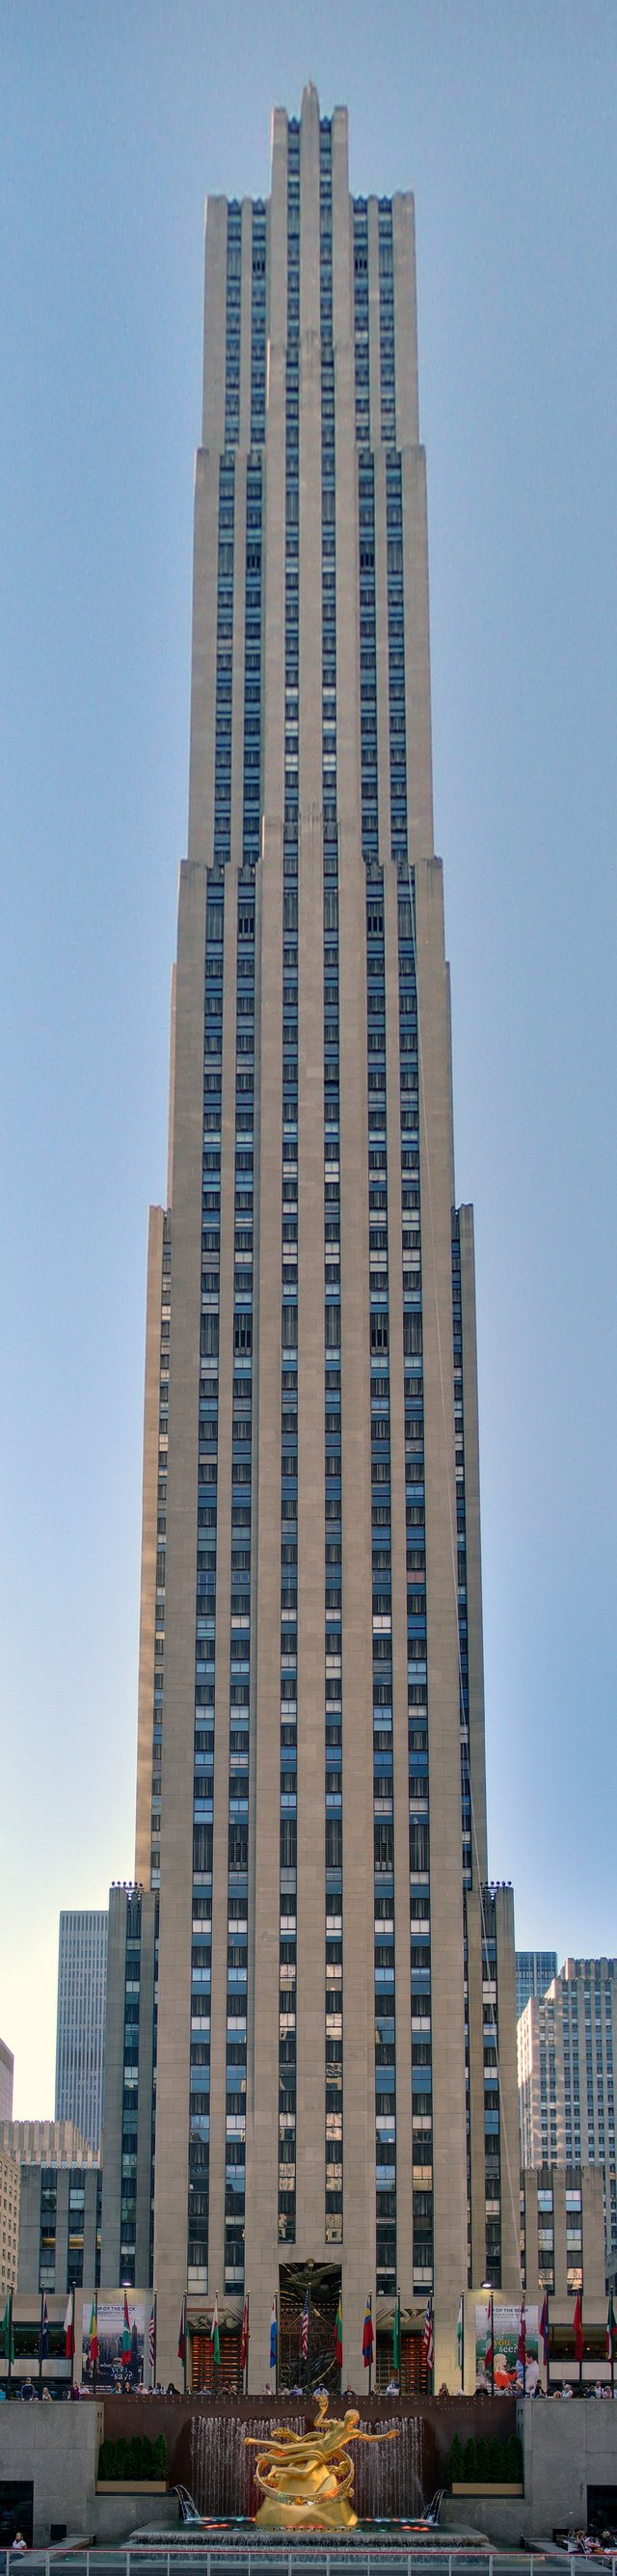 30 Rockefeller Plaza, New York City, NY, U.S.